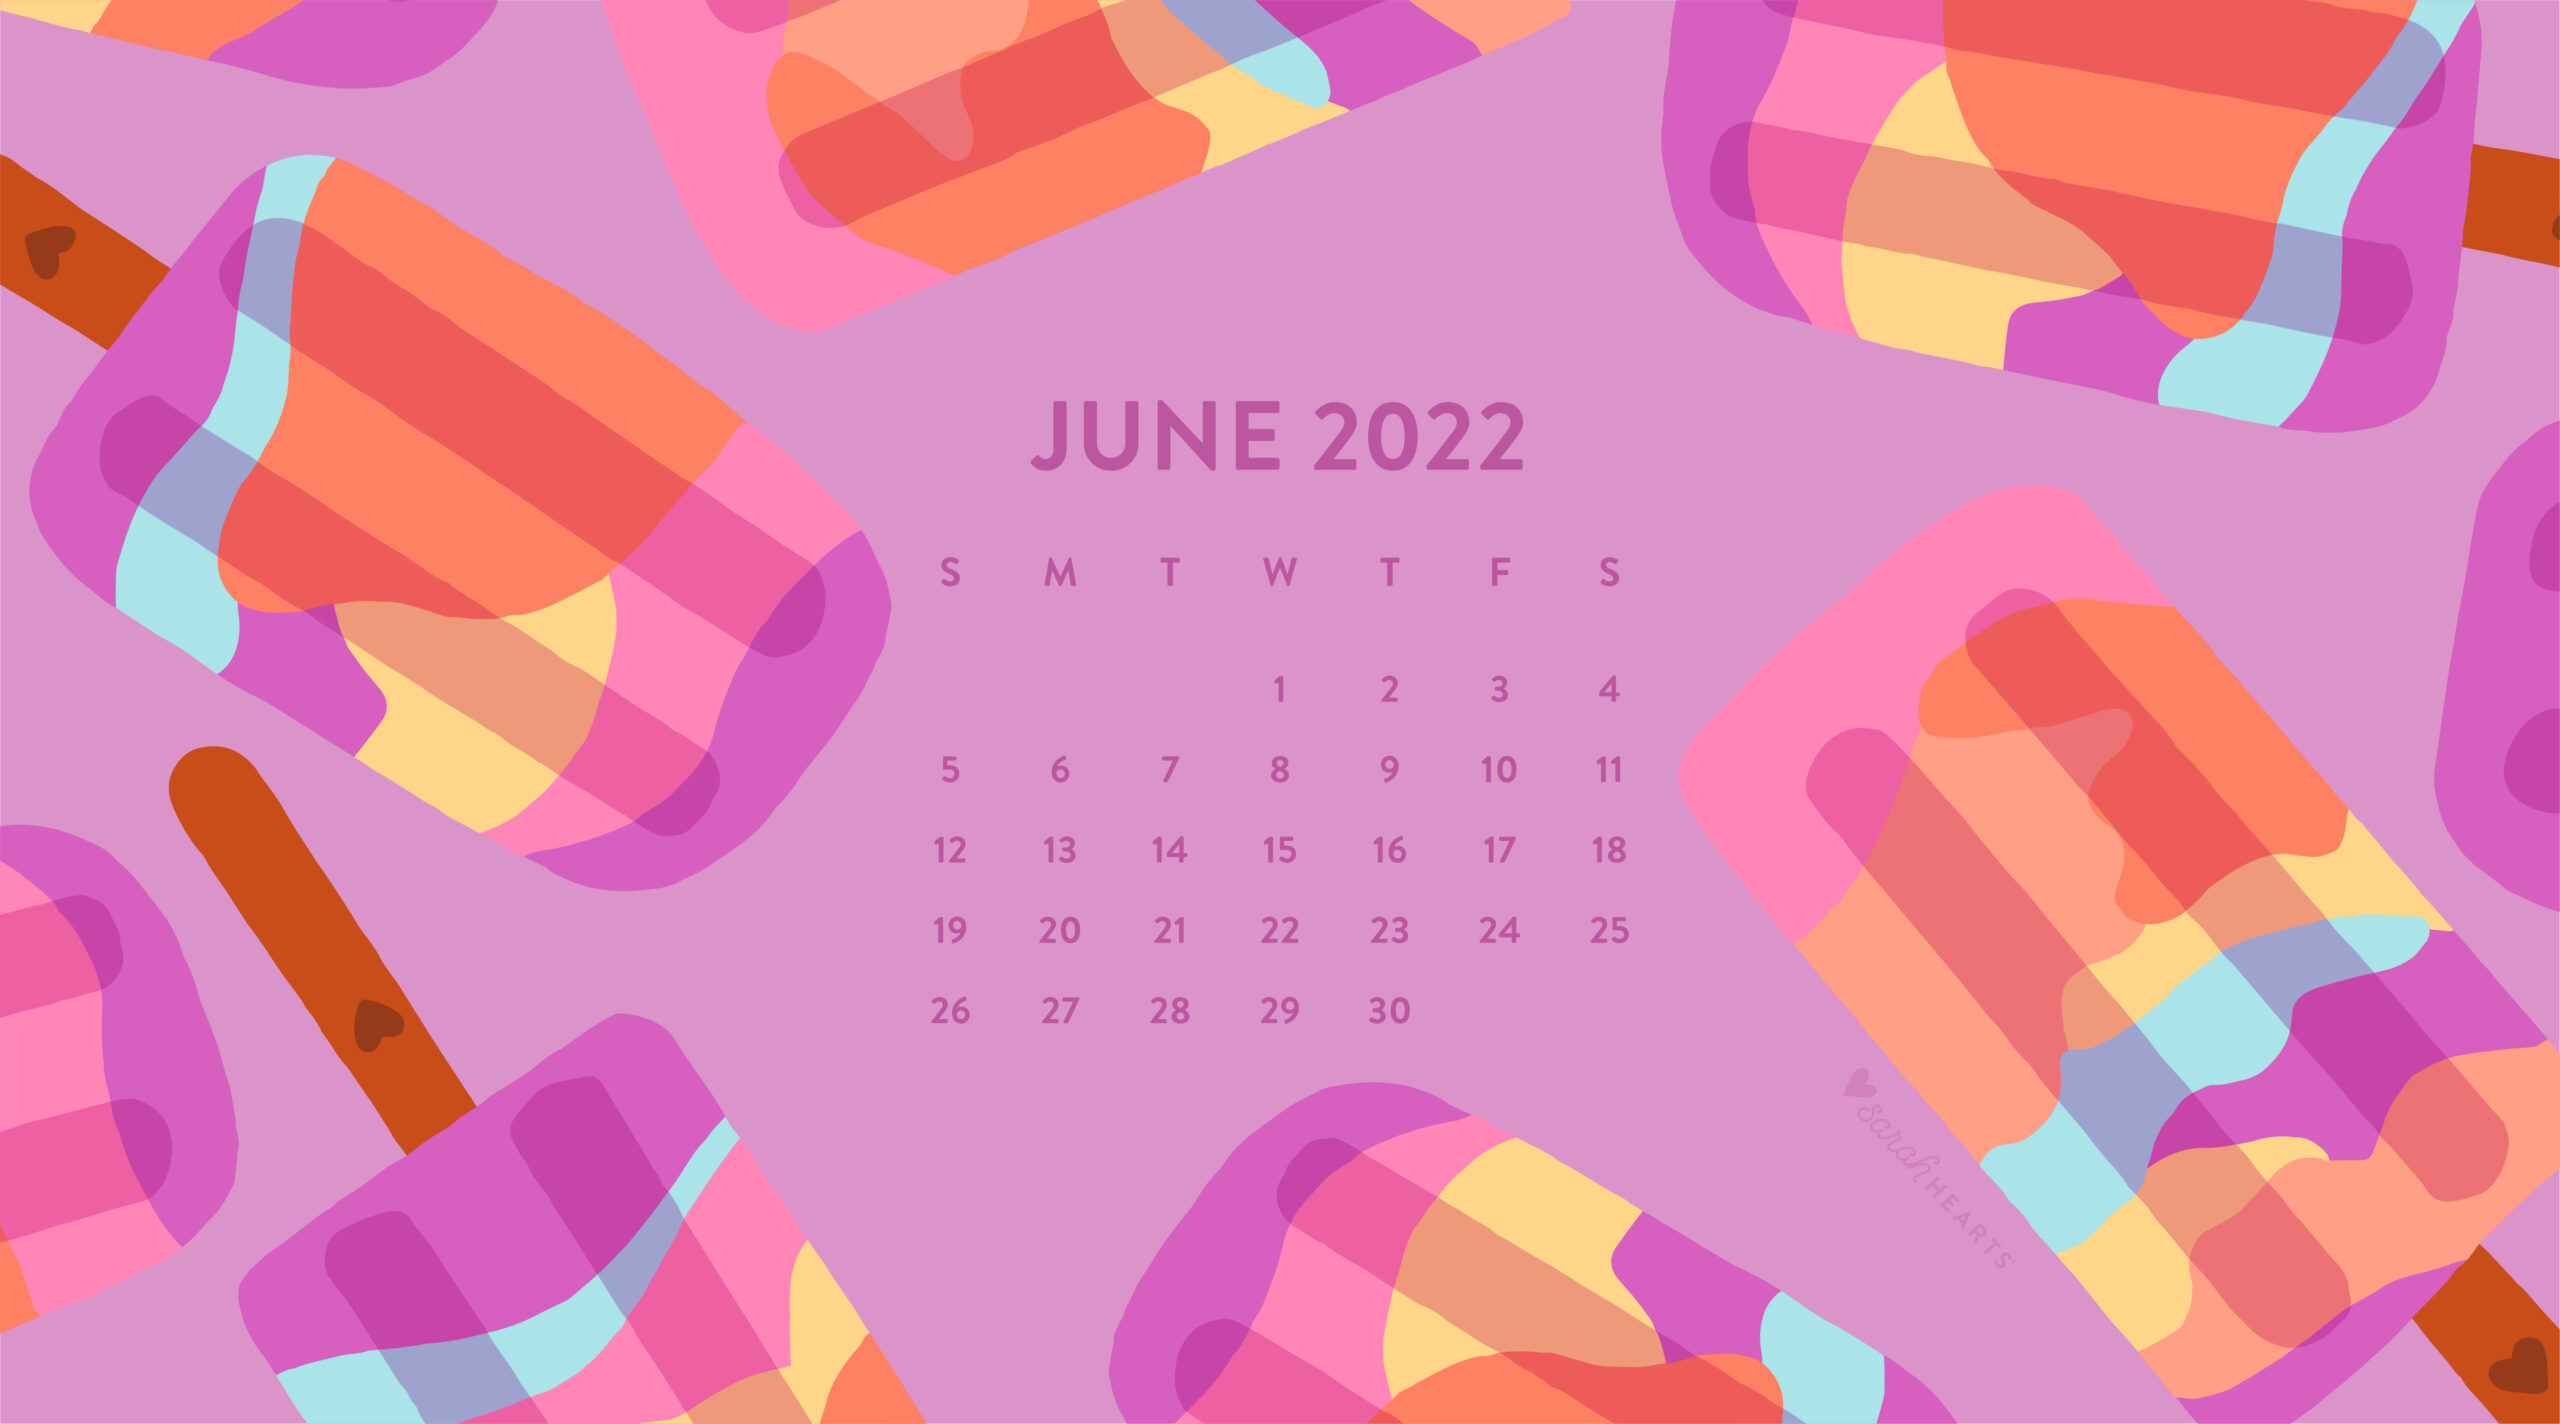 Download wallpapers 2022 June Calendar 4k 3d sun summer June 2022  summer calendars June 2022 Calendar summer background for desktop free  Pictures for desktop free